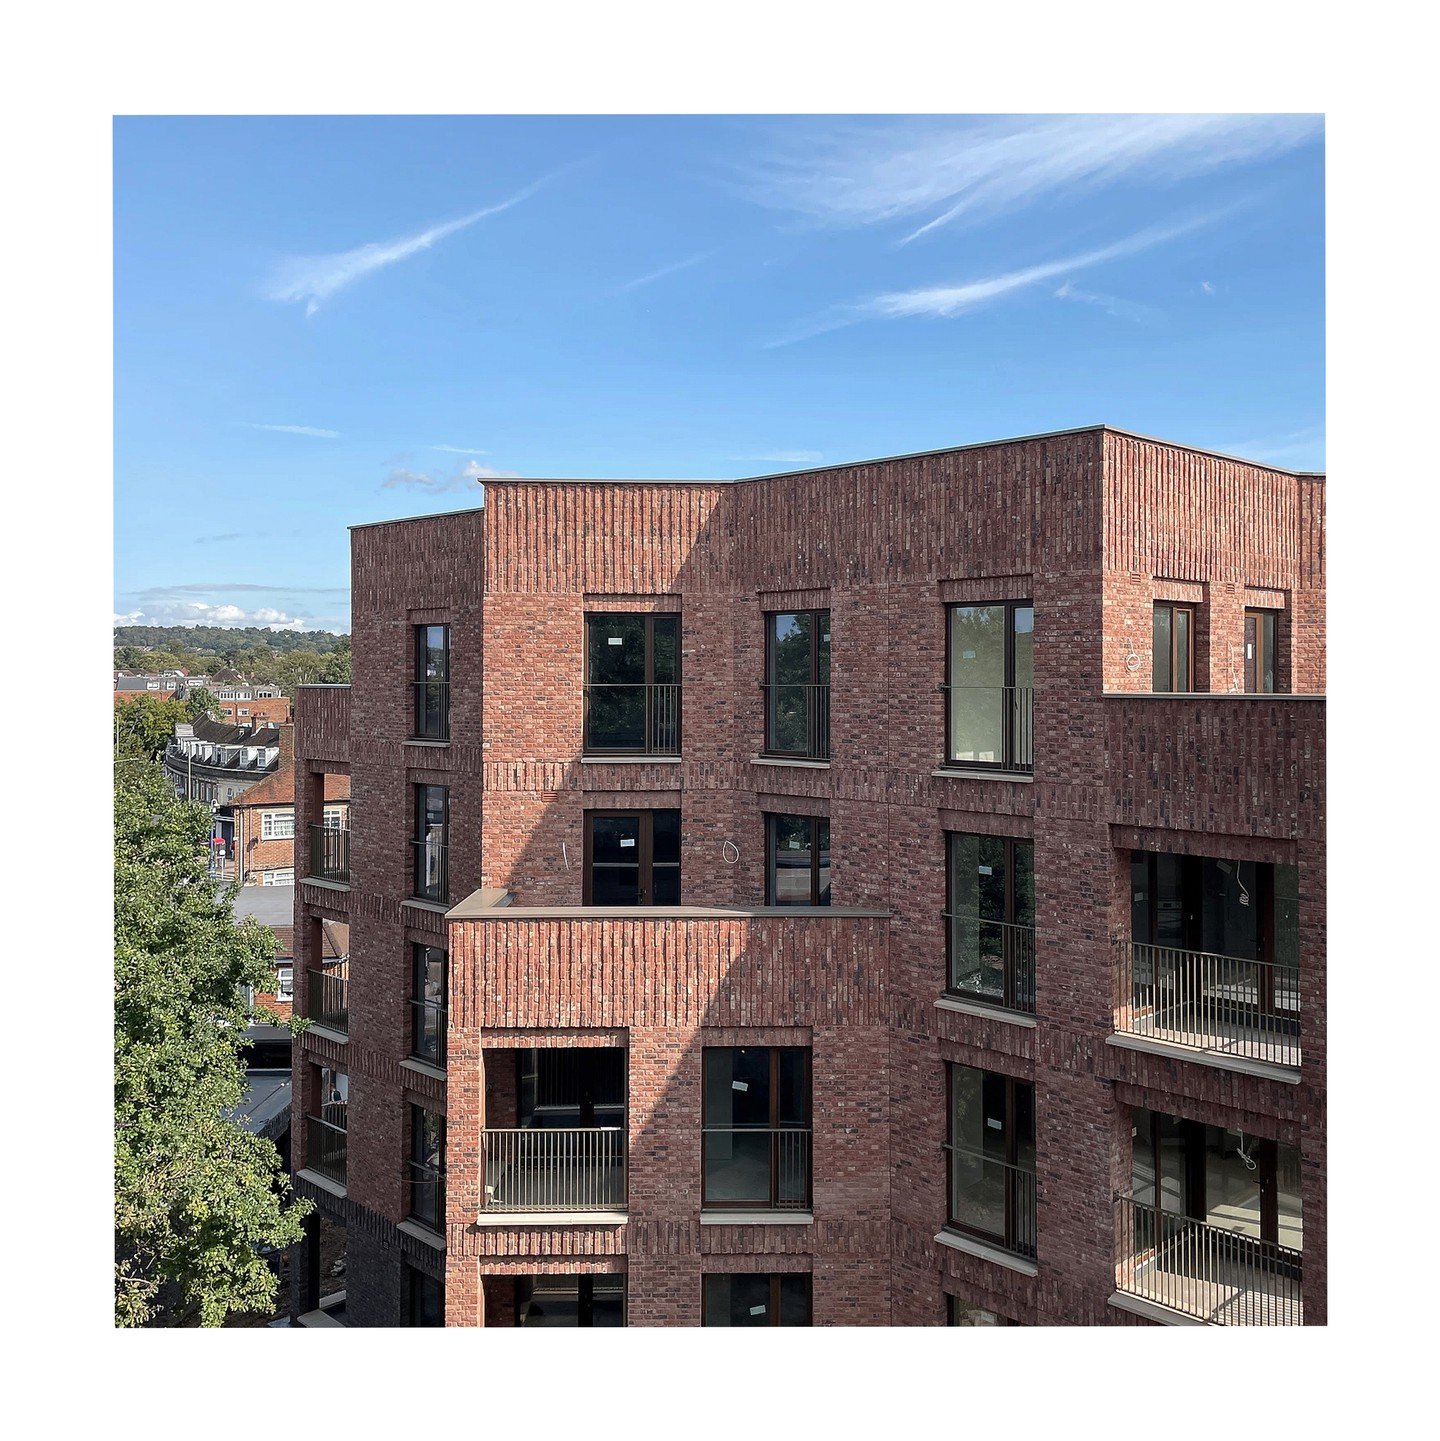 Progress at Rectory Lane, Edgware

planning - @hawkins_brown 
post planning/construction - @johnstebbingarchitectsltd 

#architecture #brickarchitecture #londonarchitecture #housing